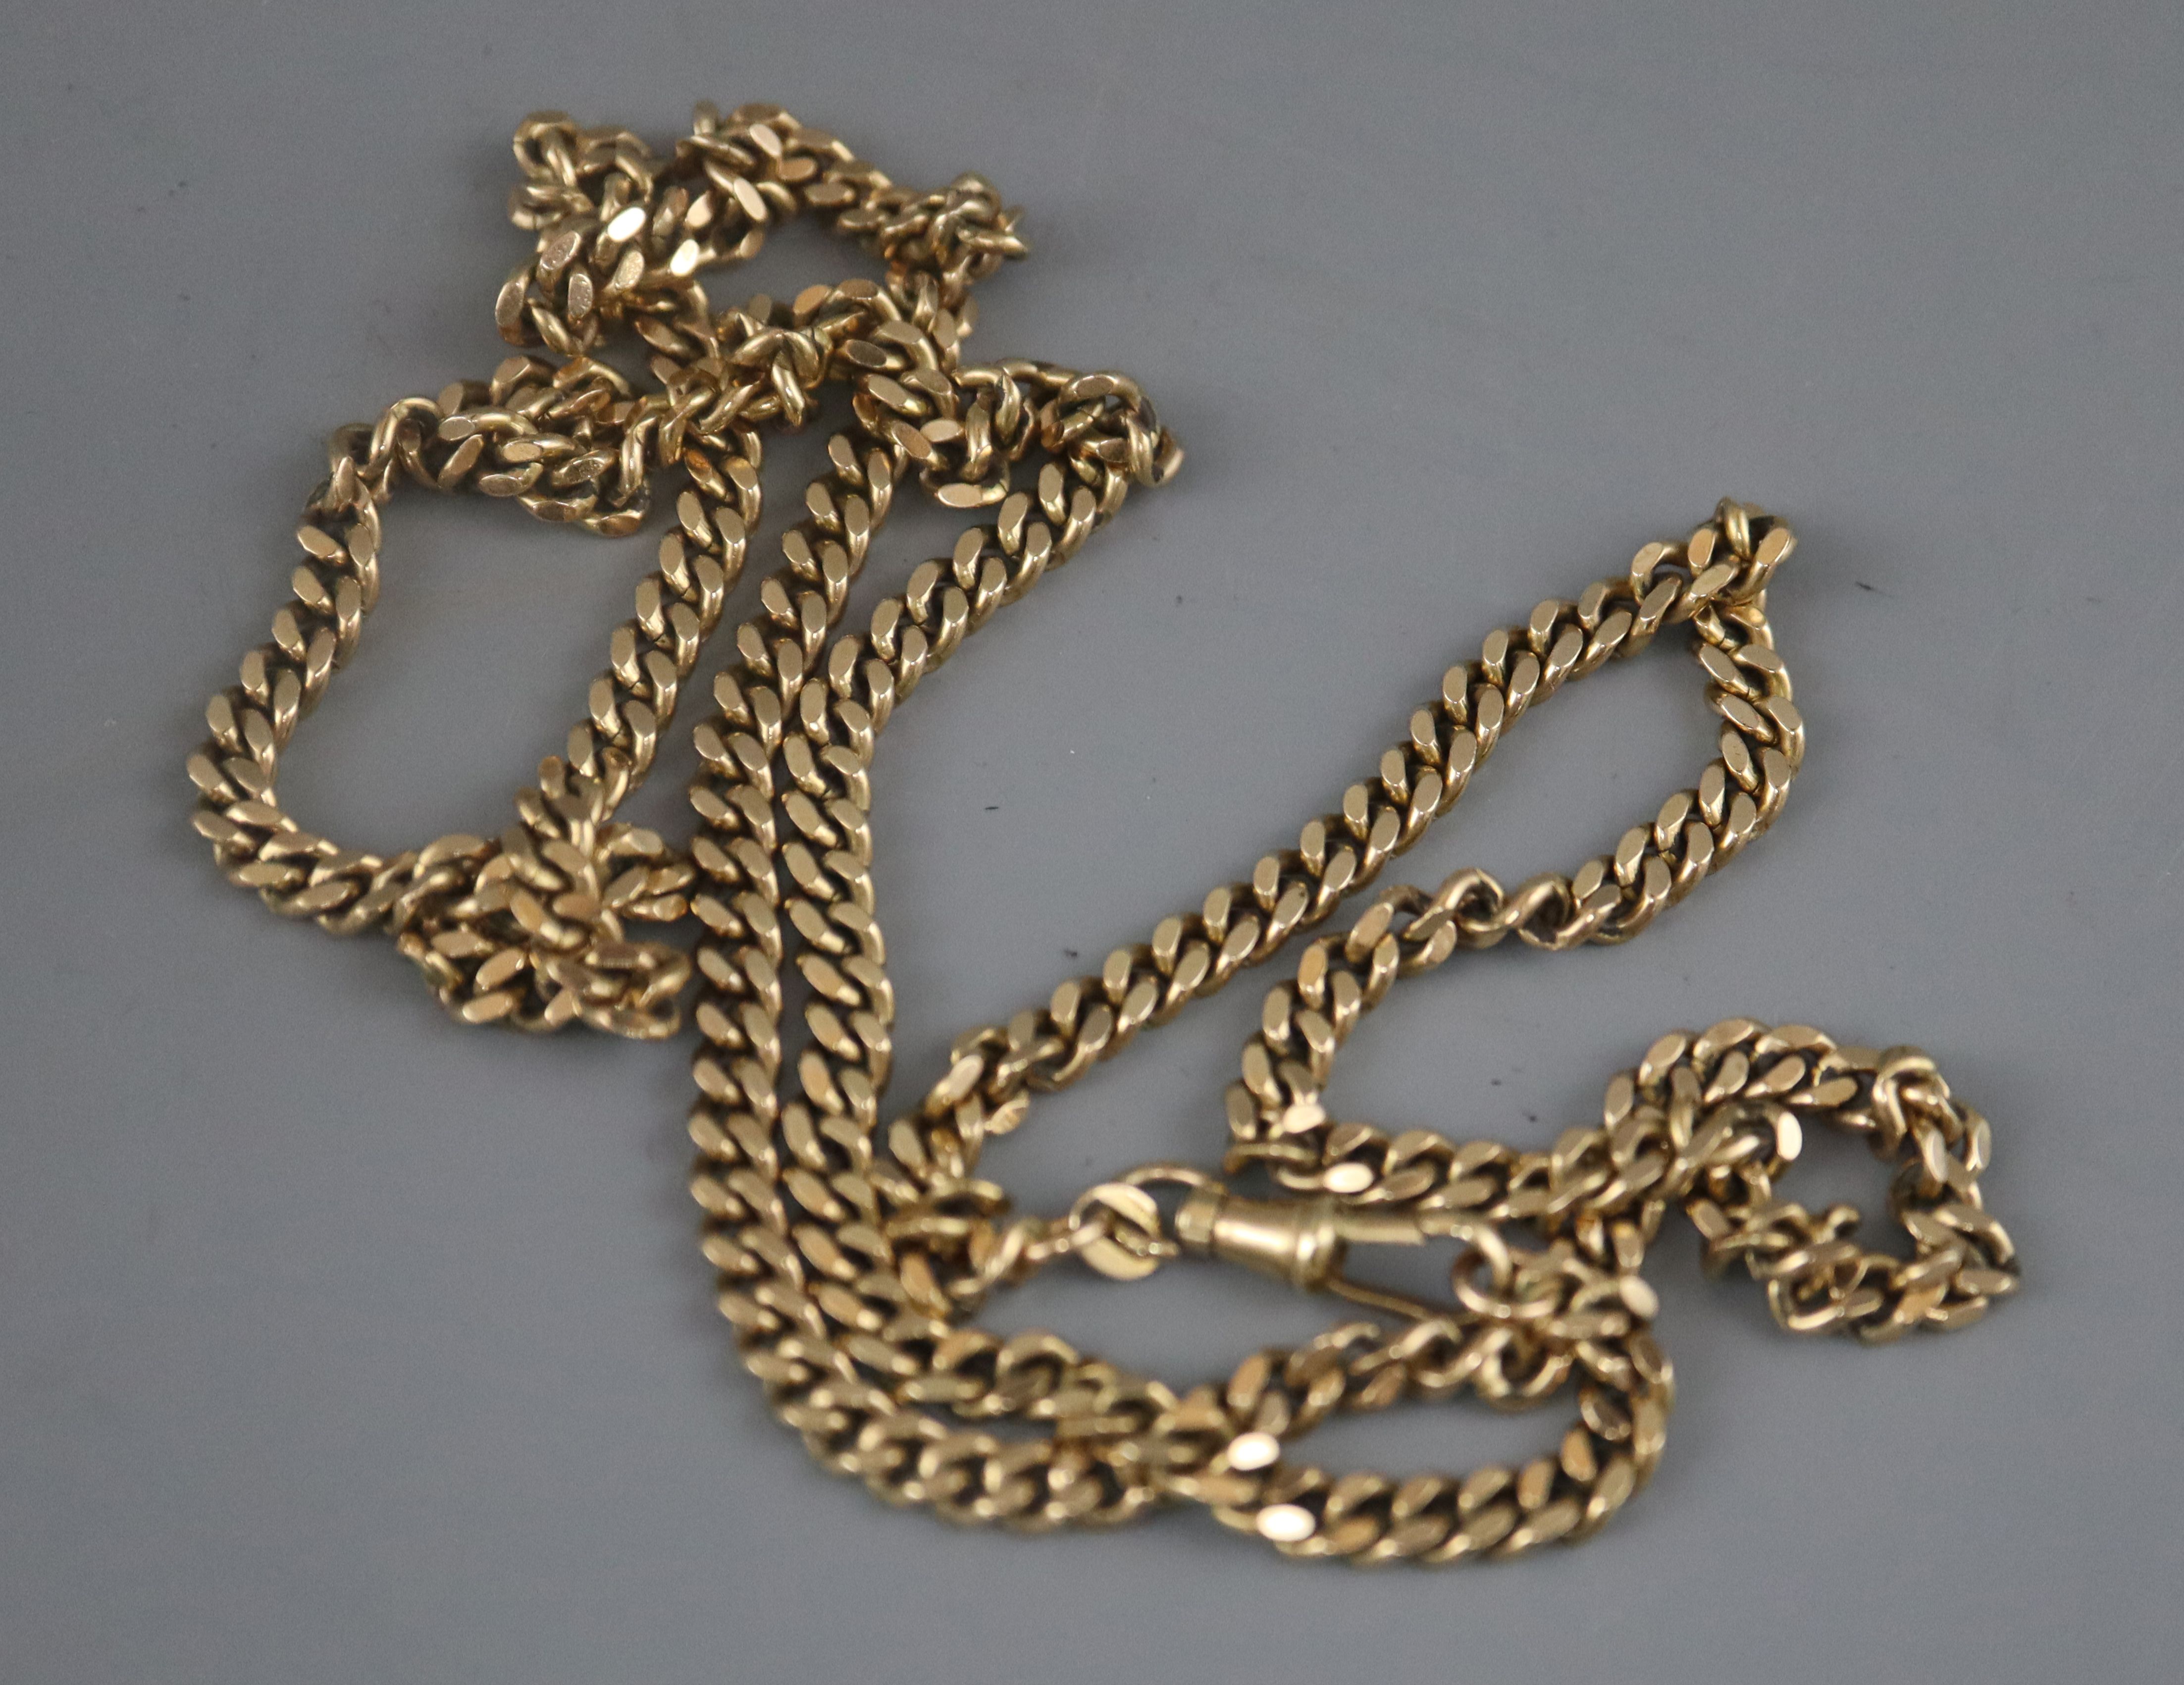 A 9ct gold fancy link neck chain, 35g, 72cm.